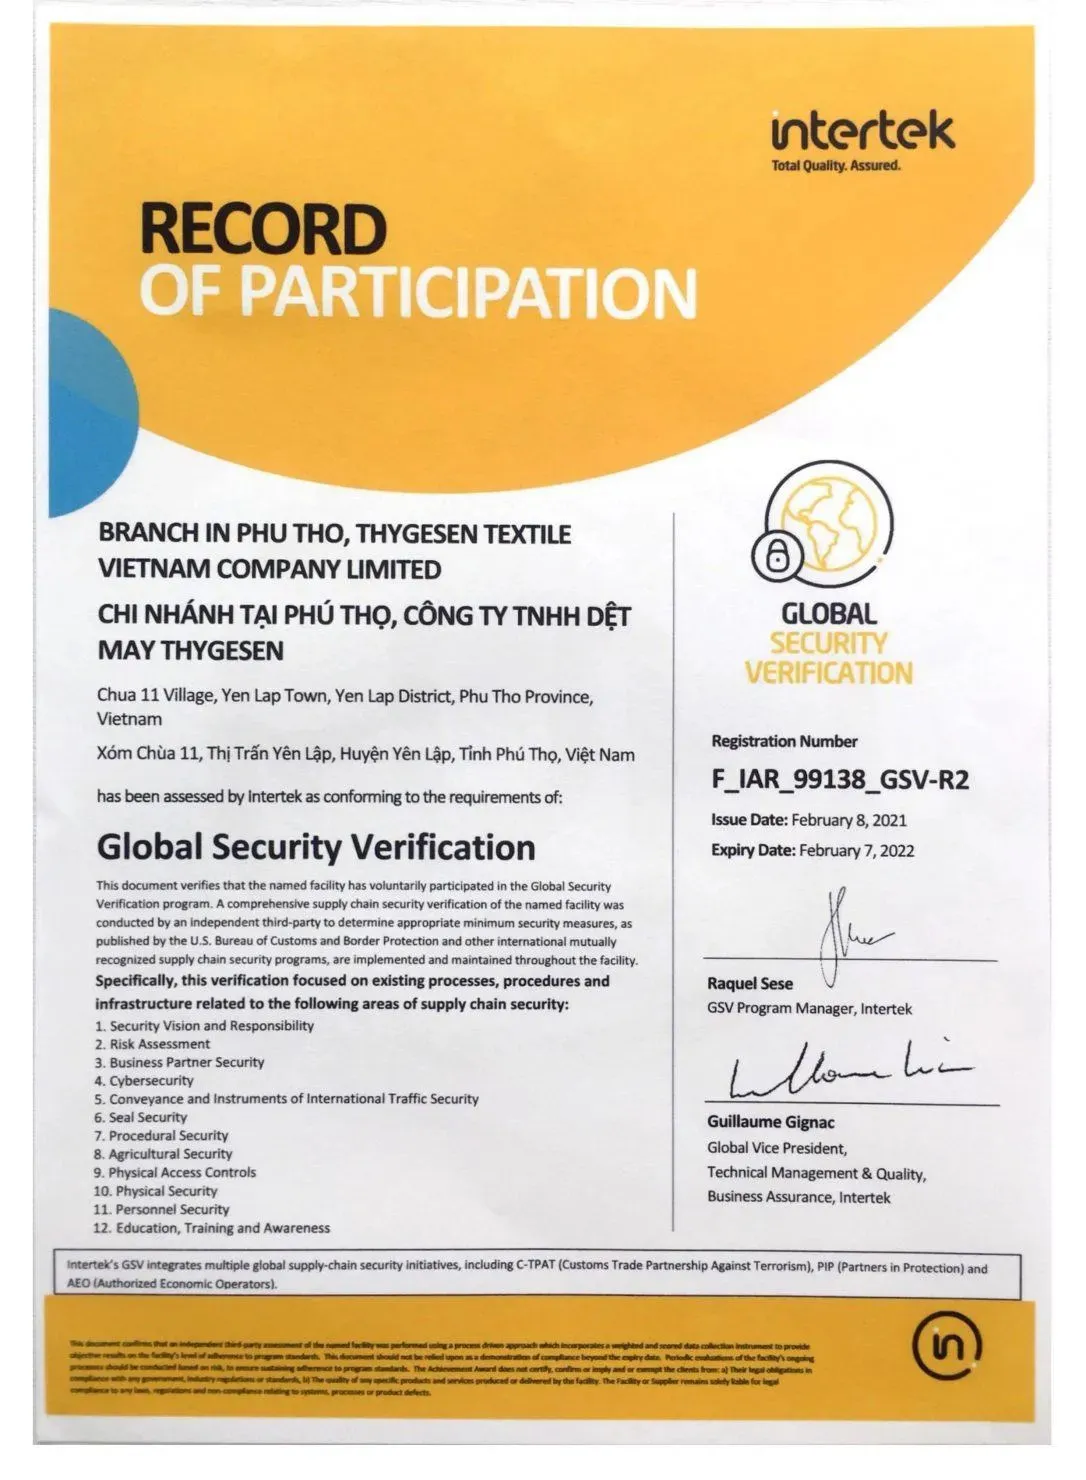 The Global Security Verification (GSV) Standard